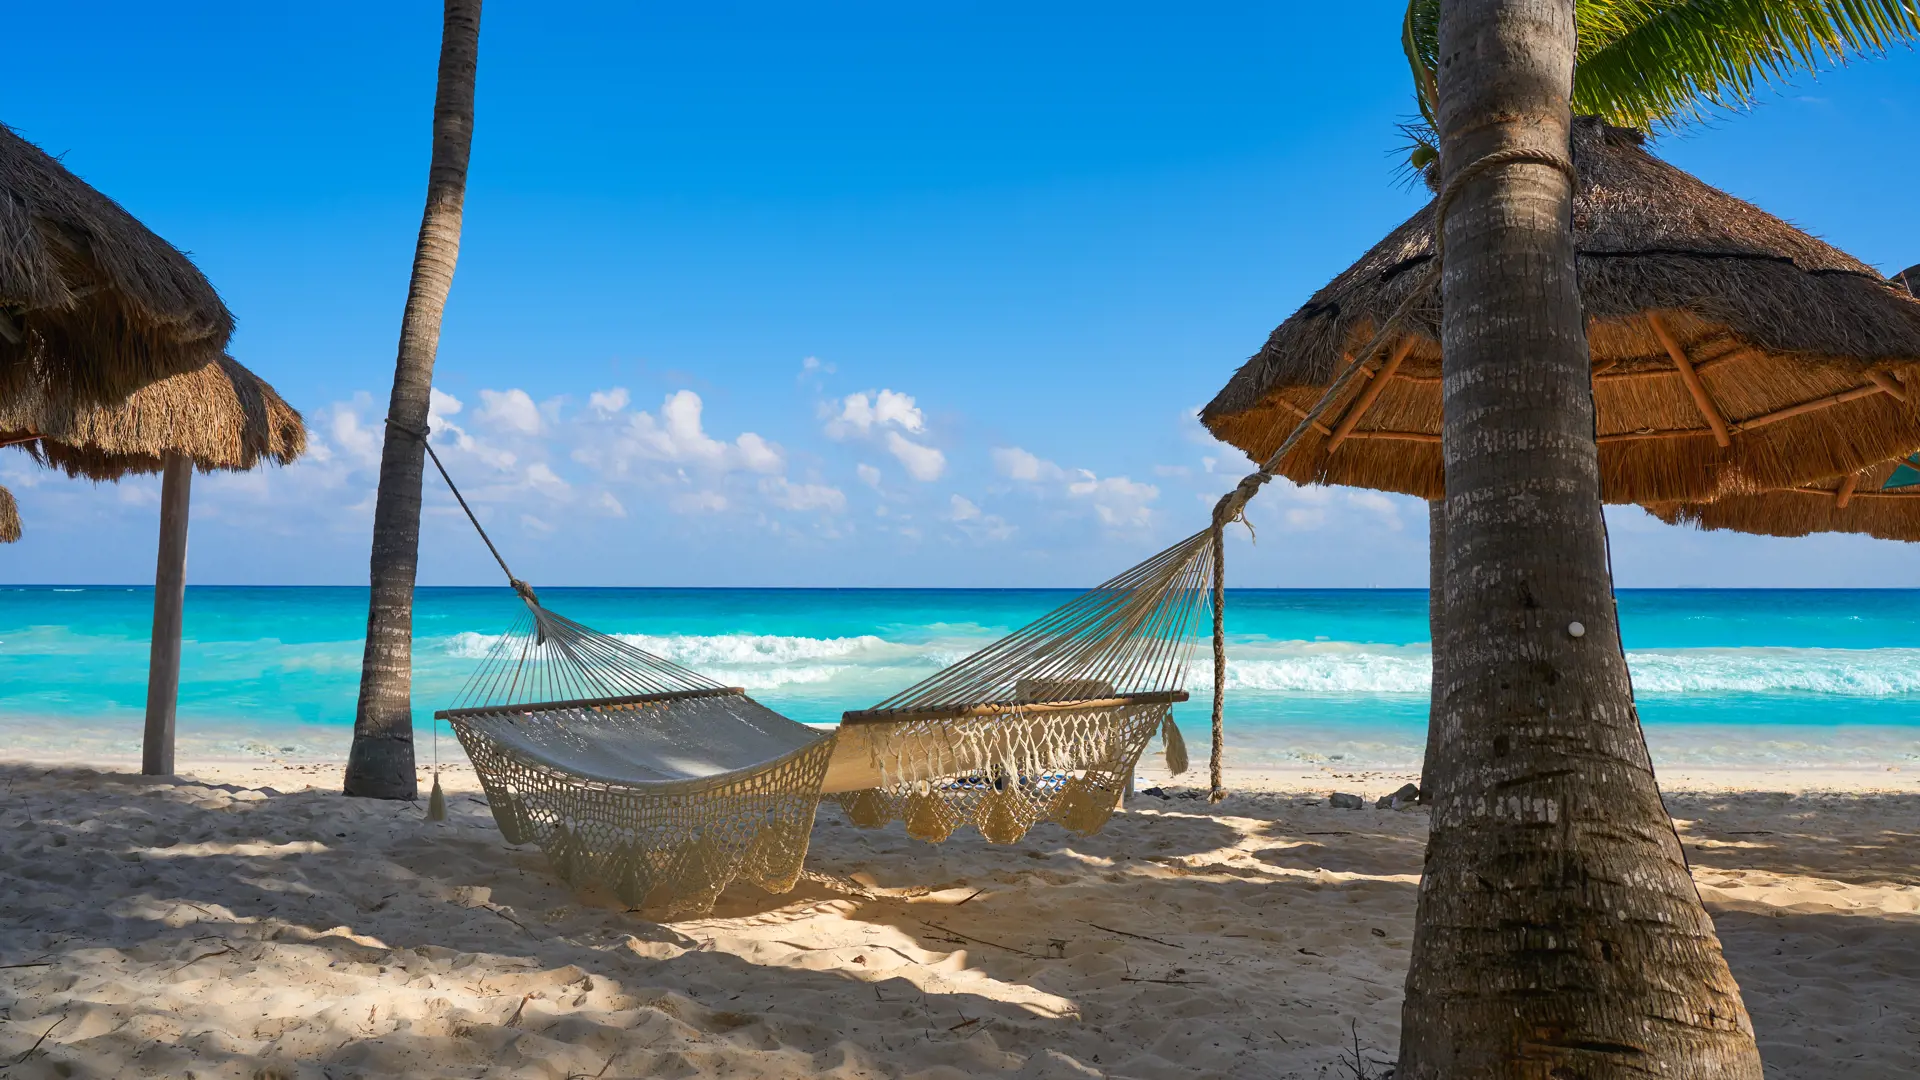 shutterstock_740944774 Playa del Carmen beach hammocks in Riviera Maya Caribbean at Mayan Mexico.jpg